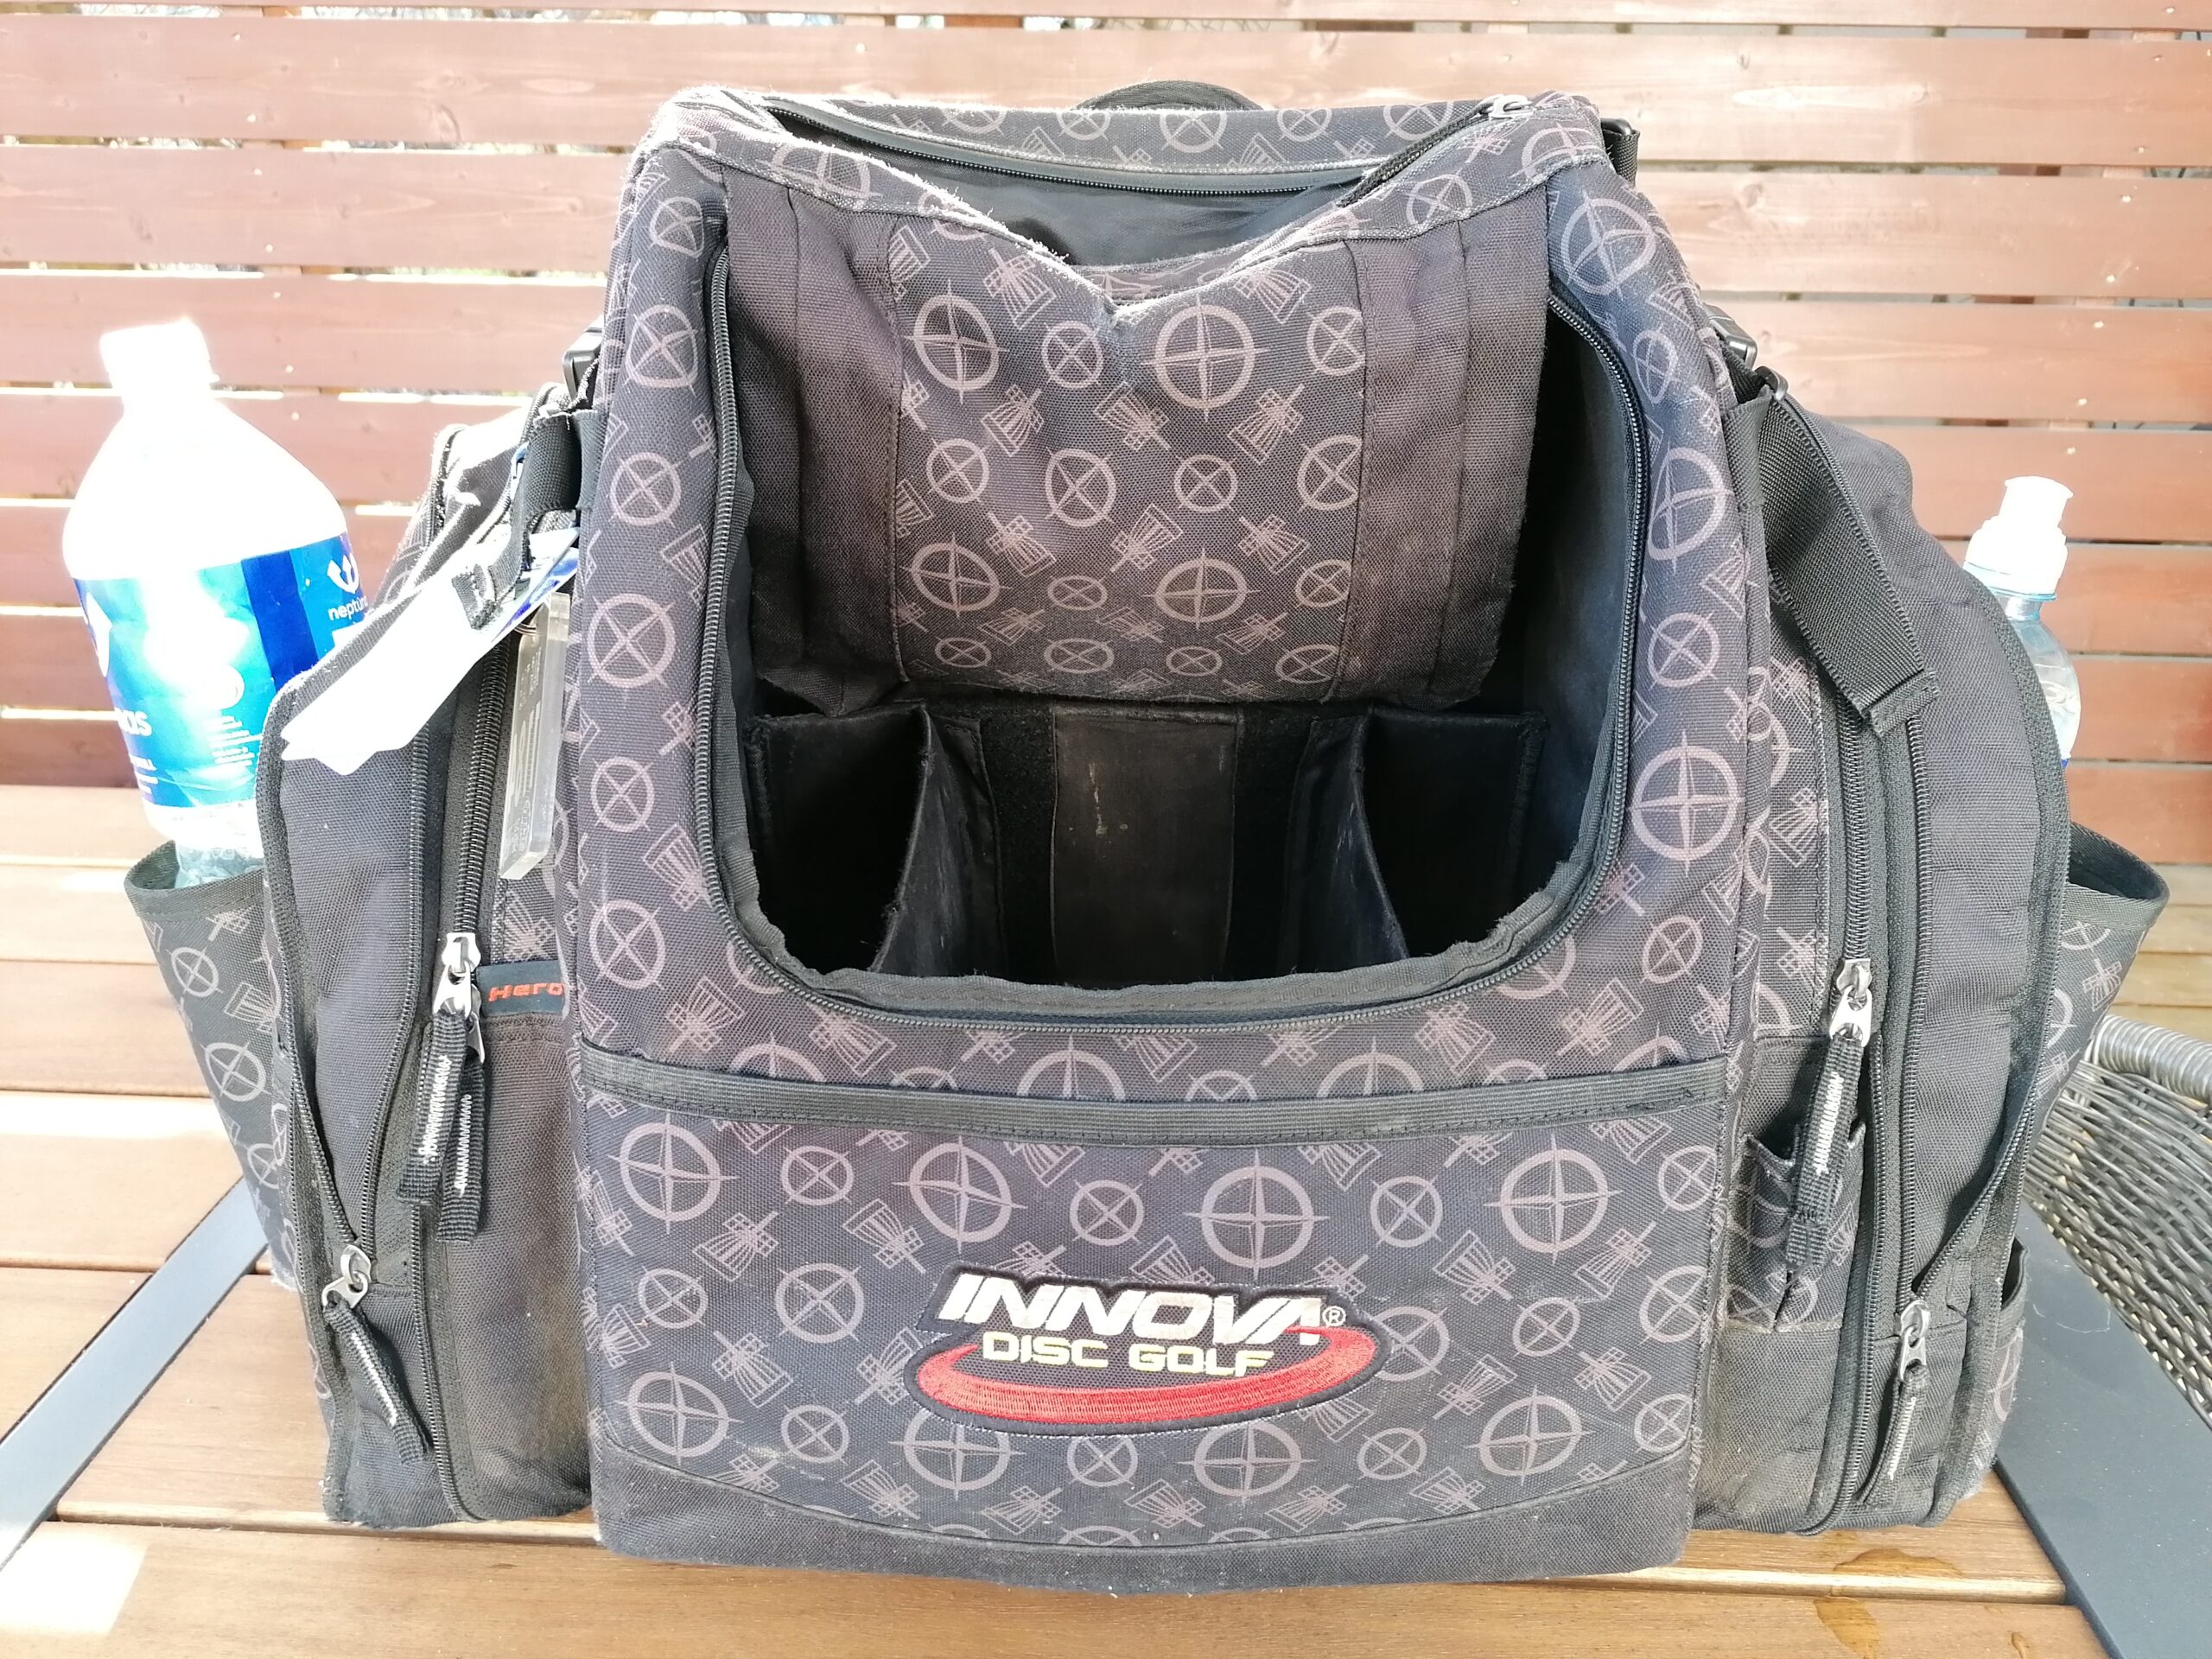 Innova Super heropack bag review photo 21